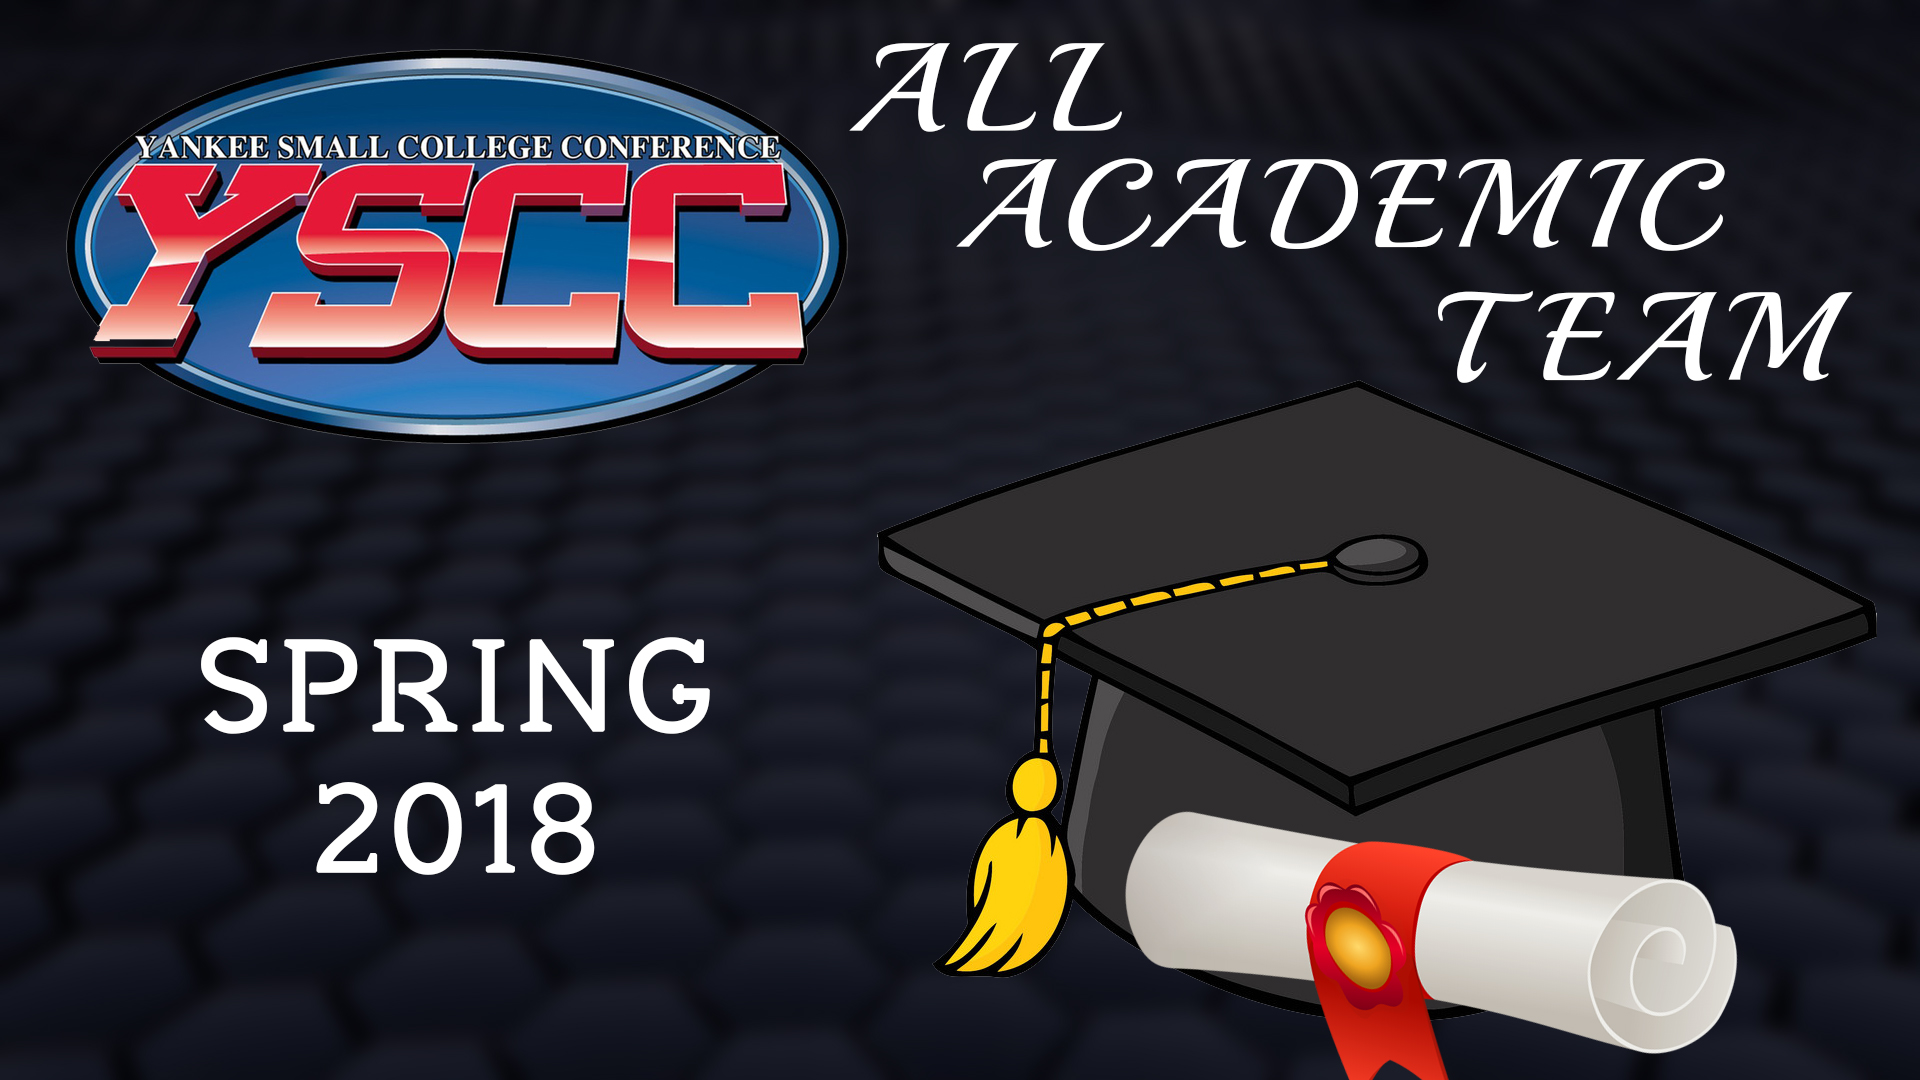 YSCC Spring All-Academic Teams announced